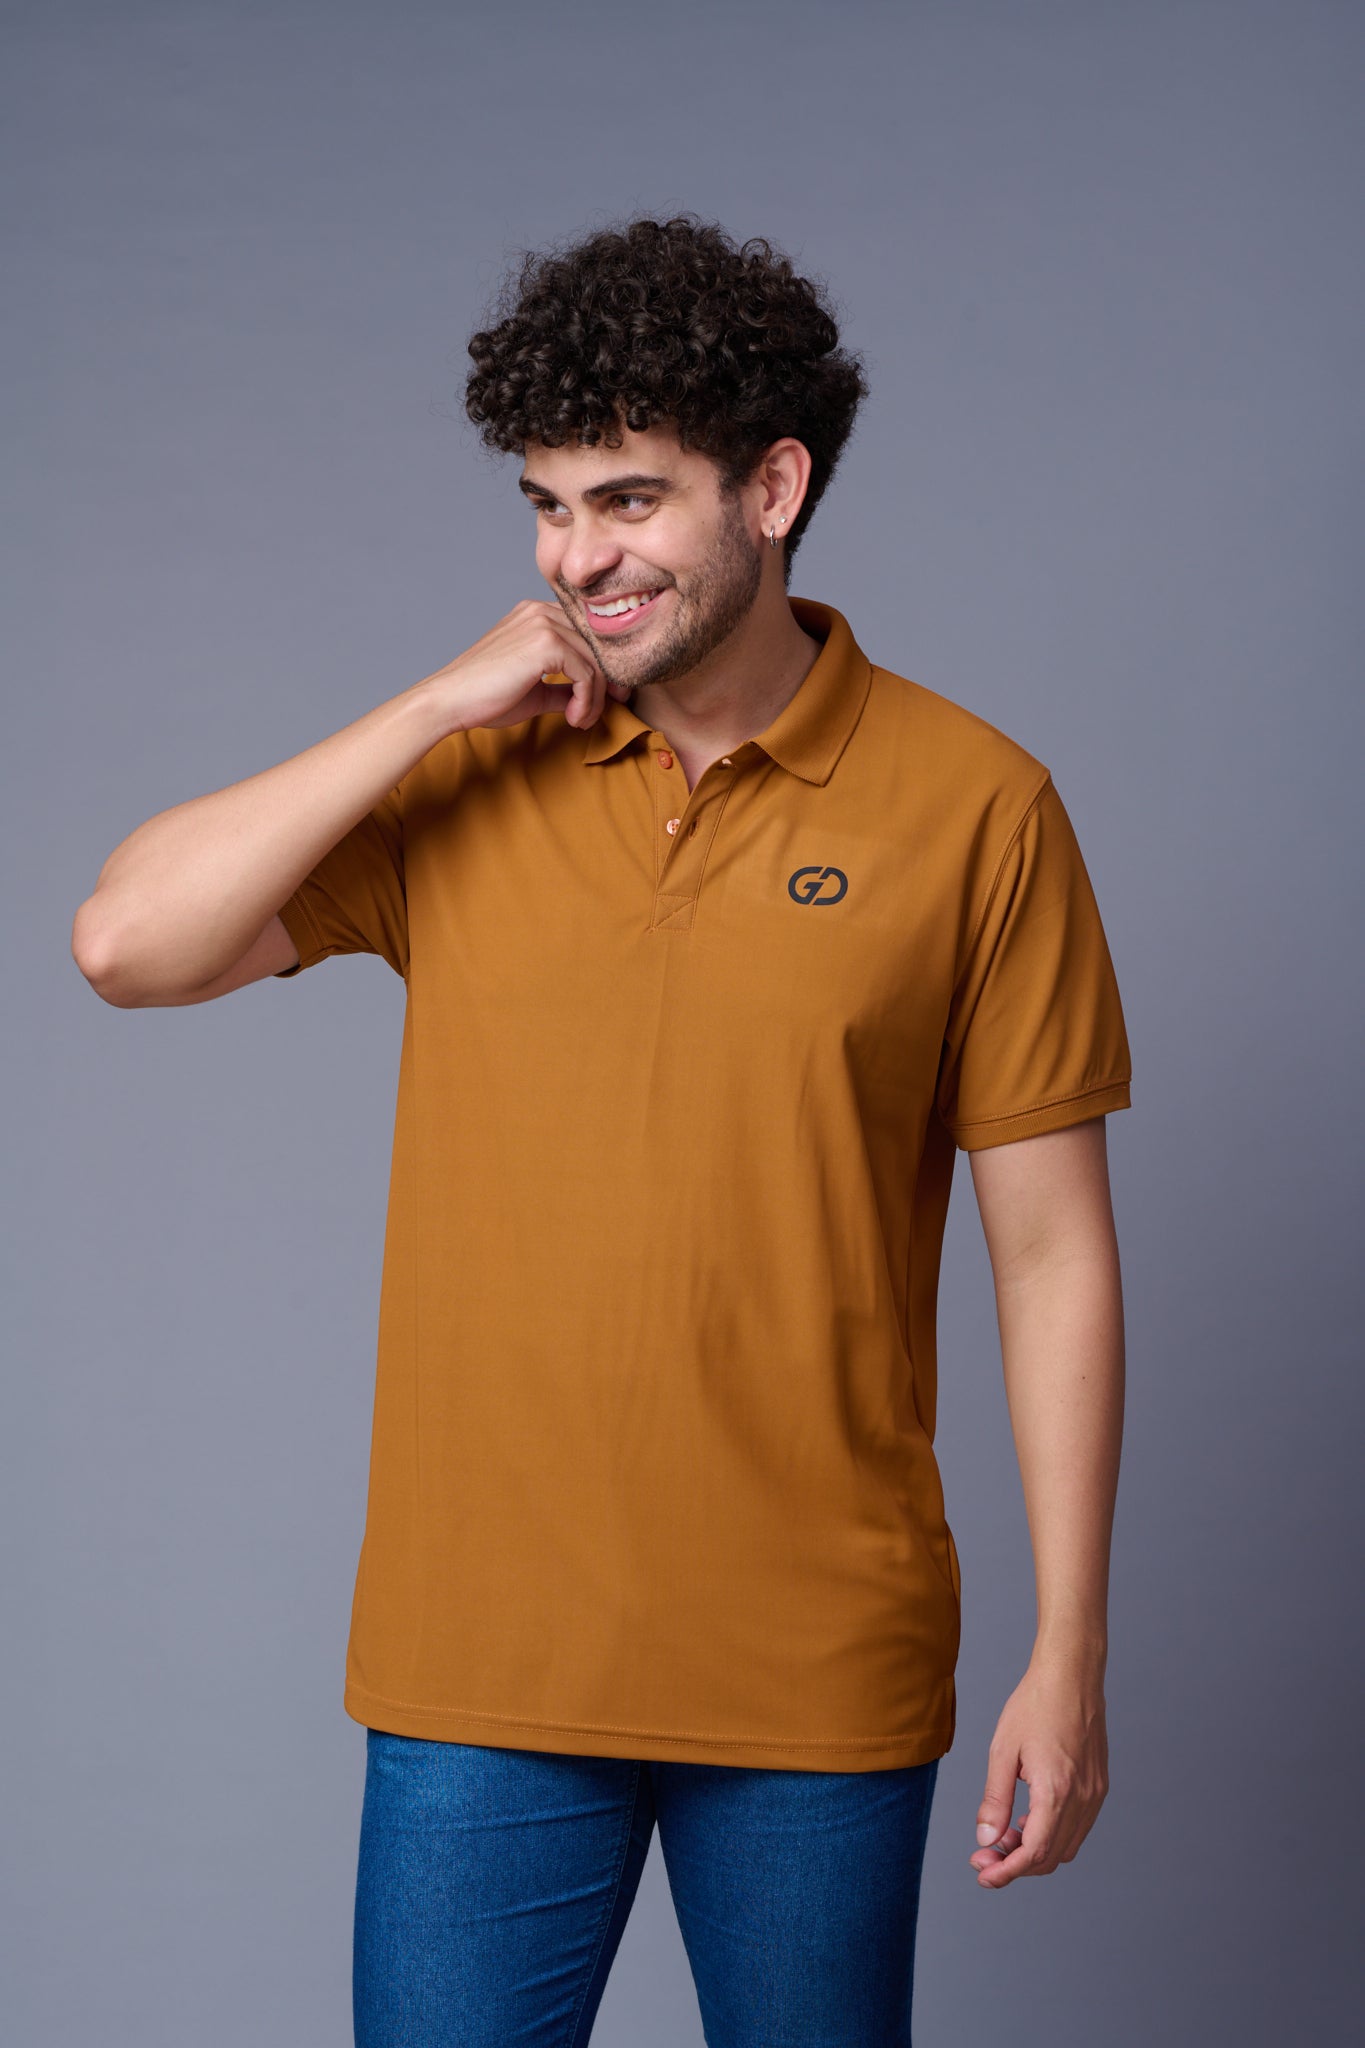 GD Logo Mustured Polo T-Shirt for Men